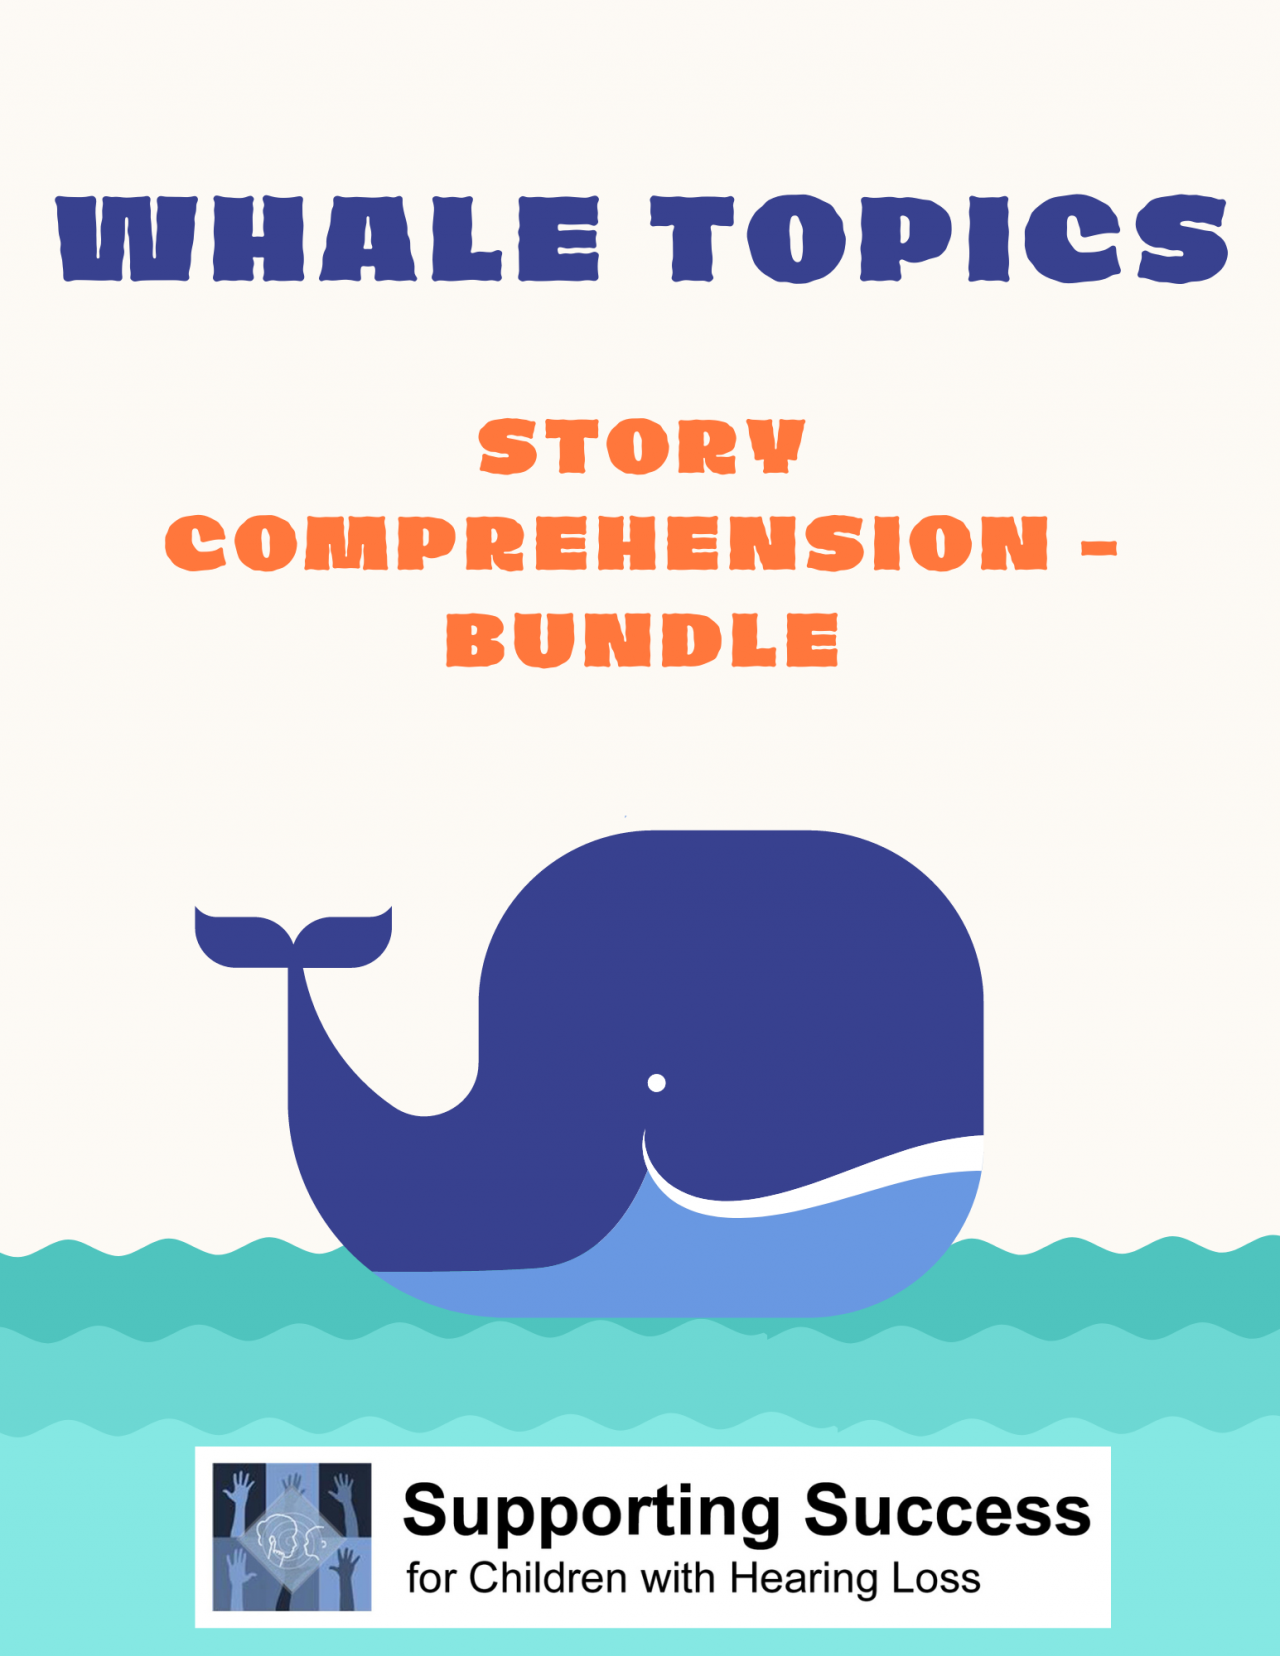 BUNDLE - Story Comprehension - Whale Topics